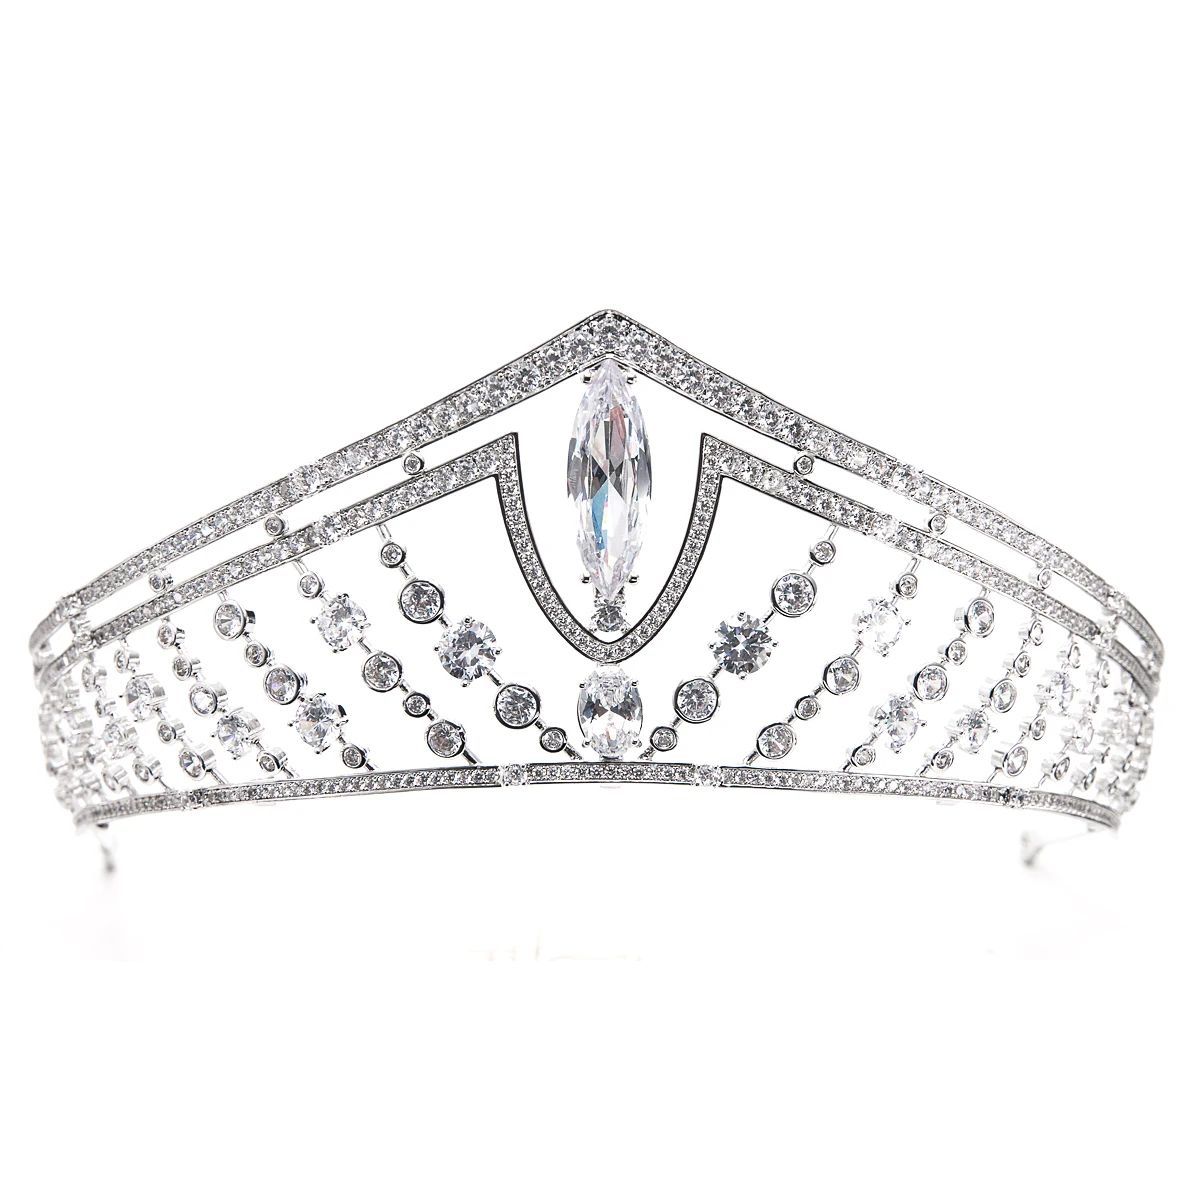 2019 Gorgeous Crystals CZ Cubic Zirconia Wedding Bridal Royal Tiara Diadem Crown Women Prom Hair Jewelry Accessories CH10221